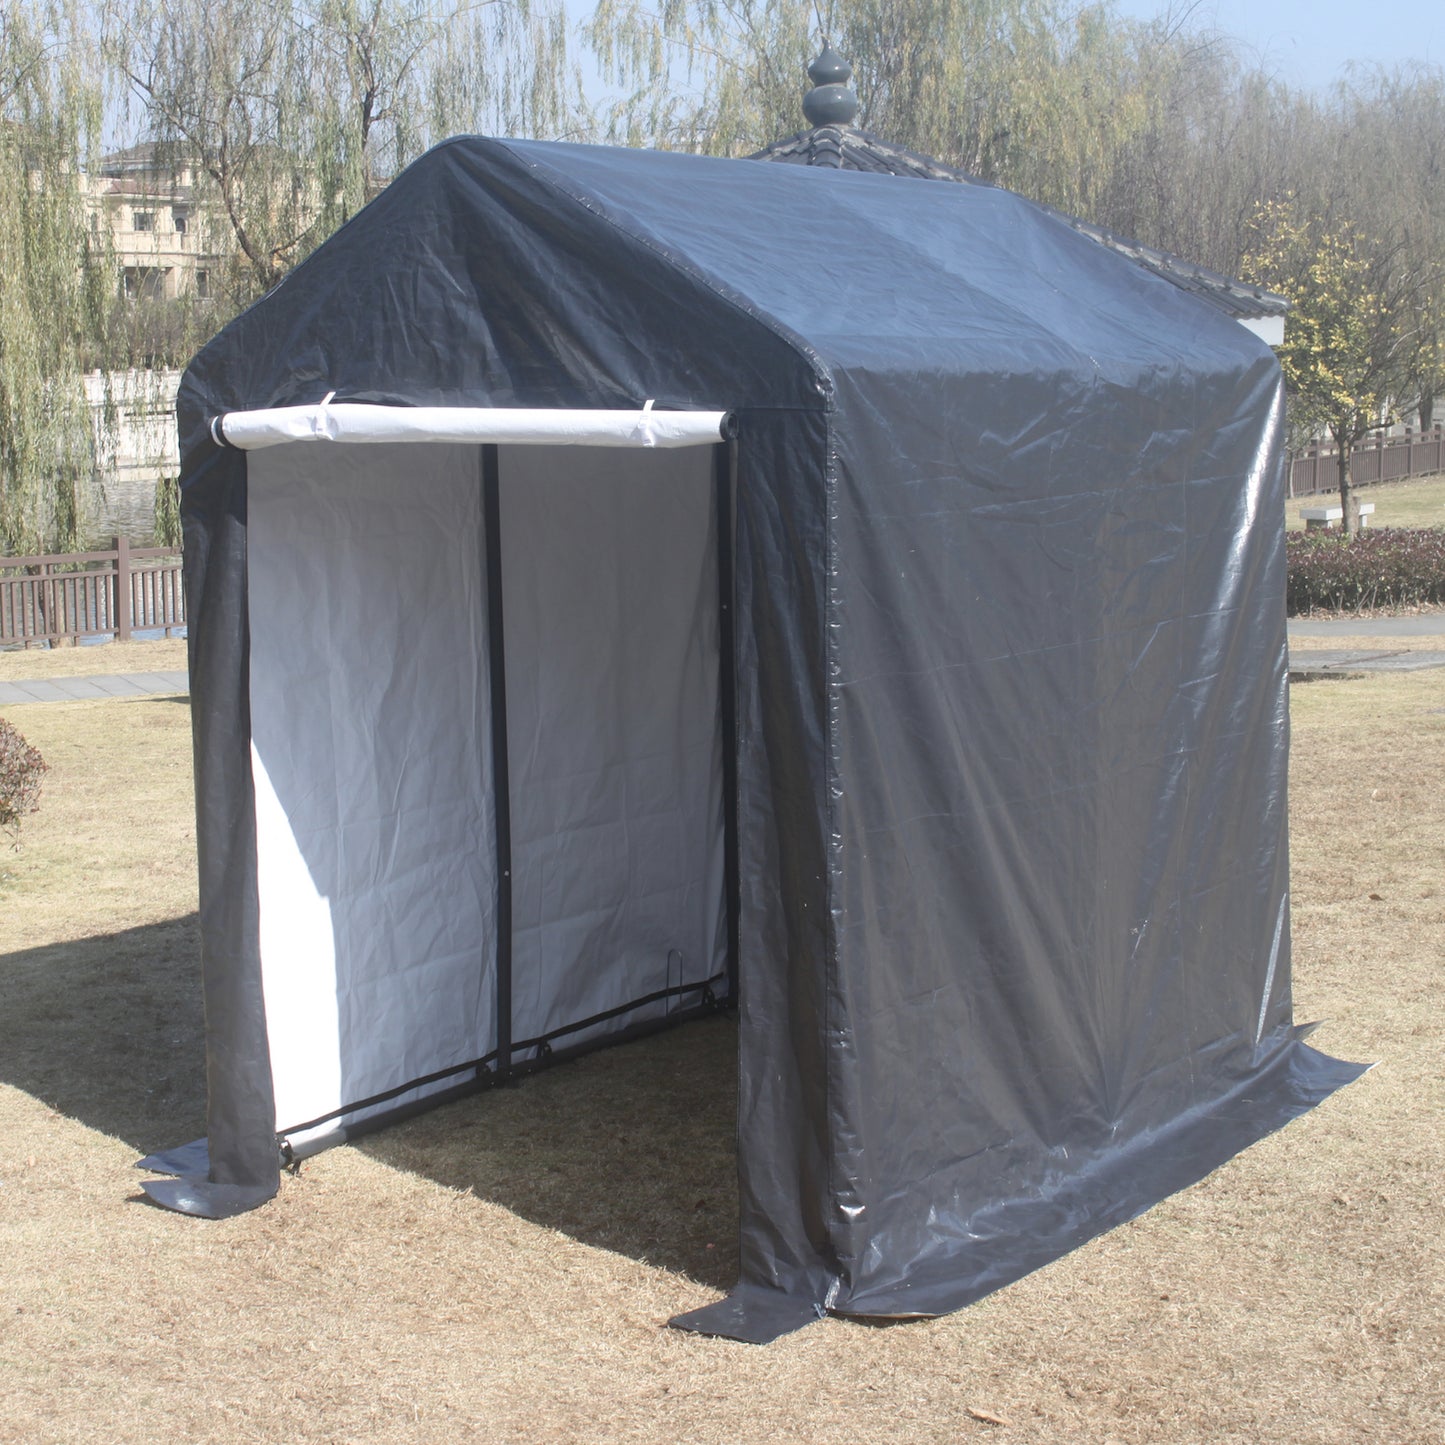 6x8ft heavy duty outdoor storage shed outdoor garage for motorcyle,bike, garden tools, ATV, grey